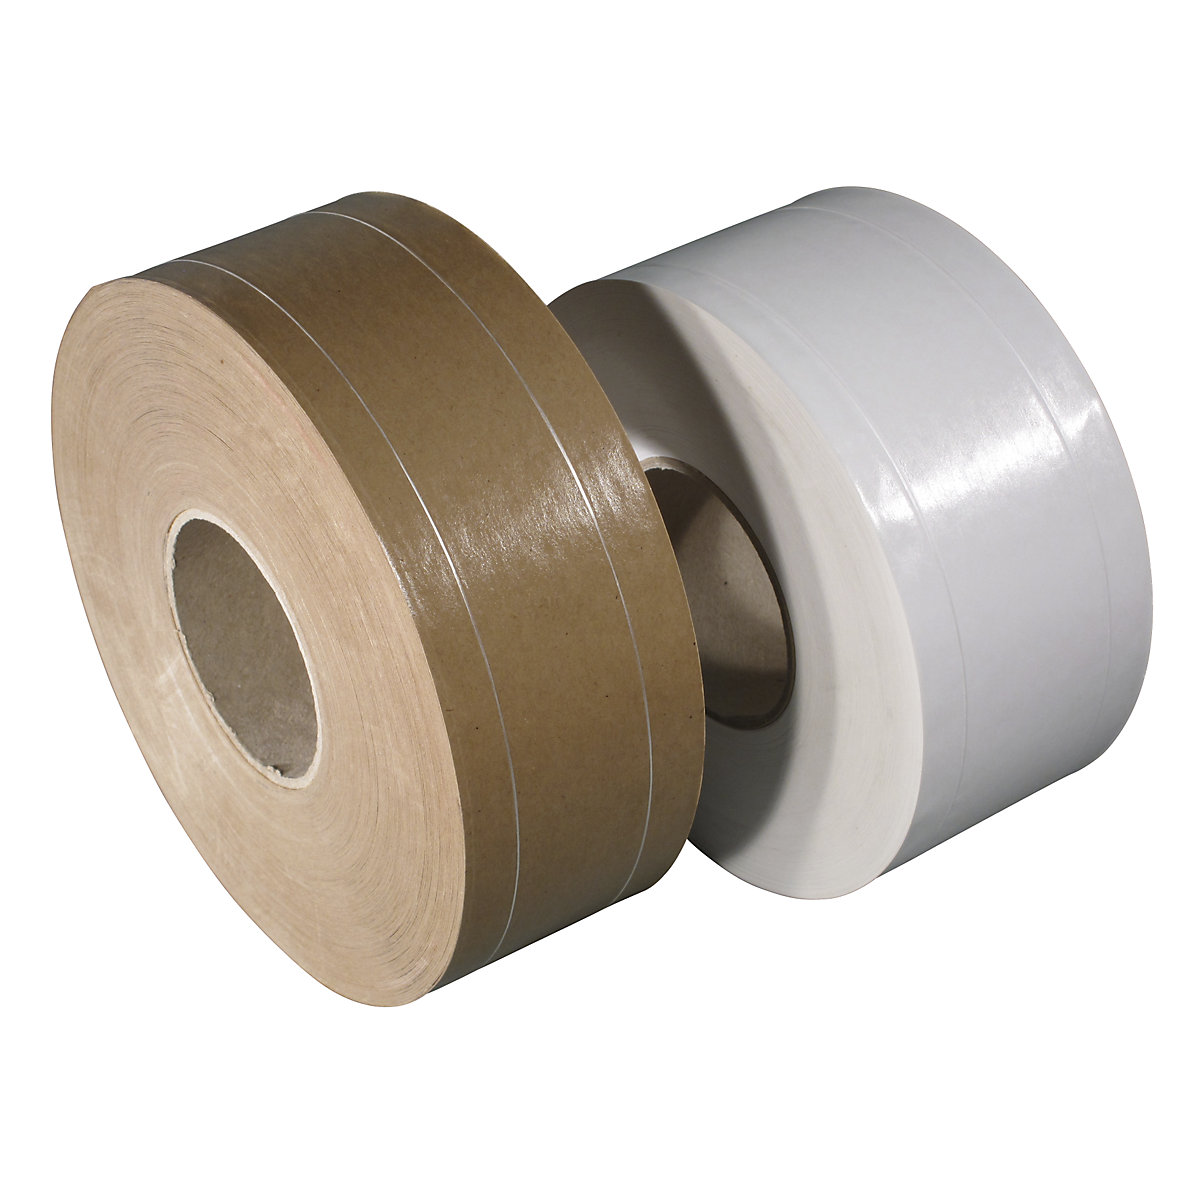 Gummed tape, double fibre reinforced, pack of 12 rolls, brown, tape width 60 mm-1